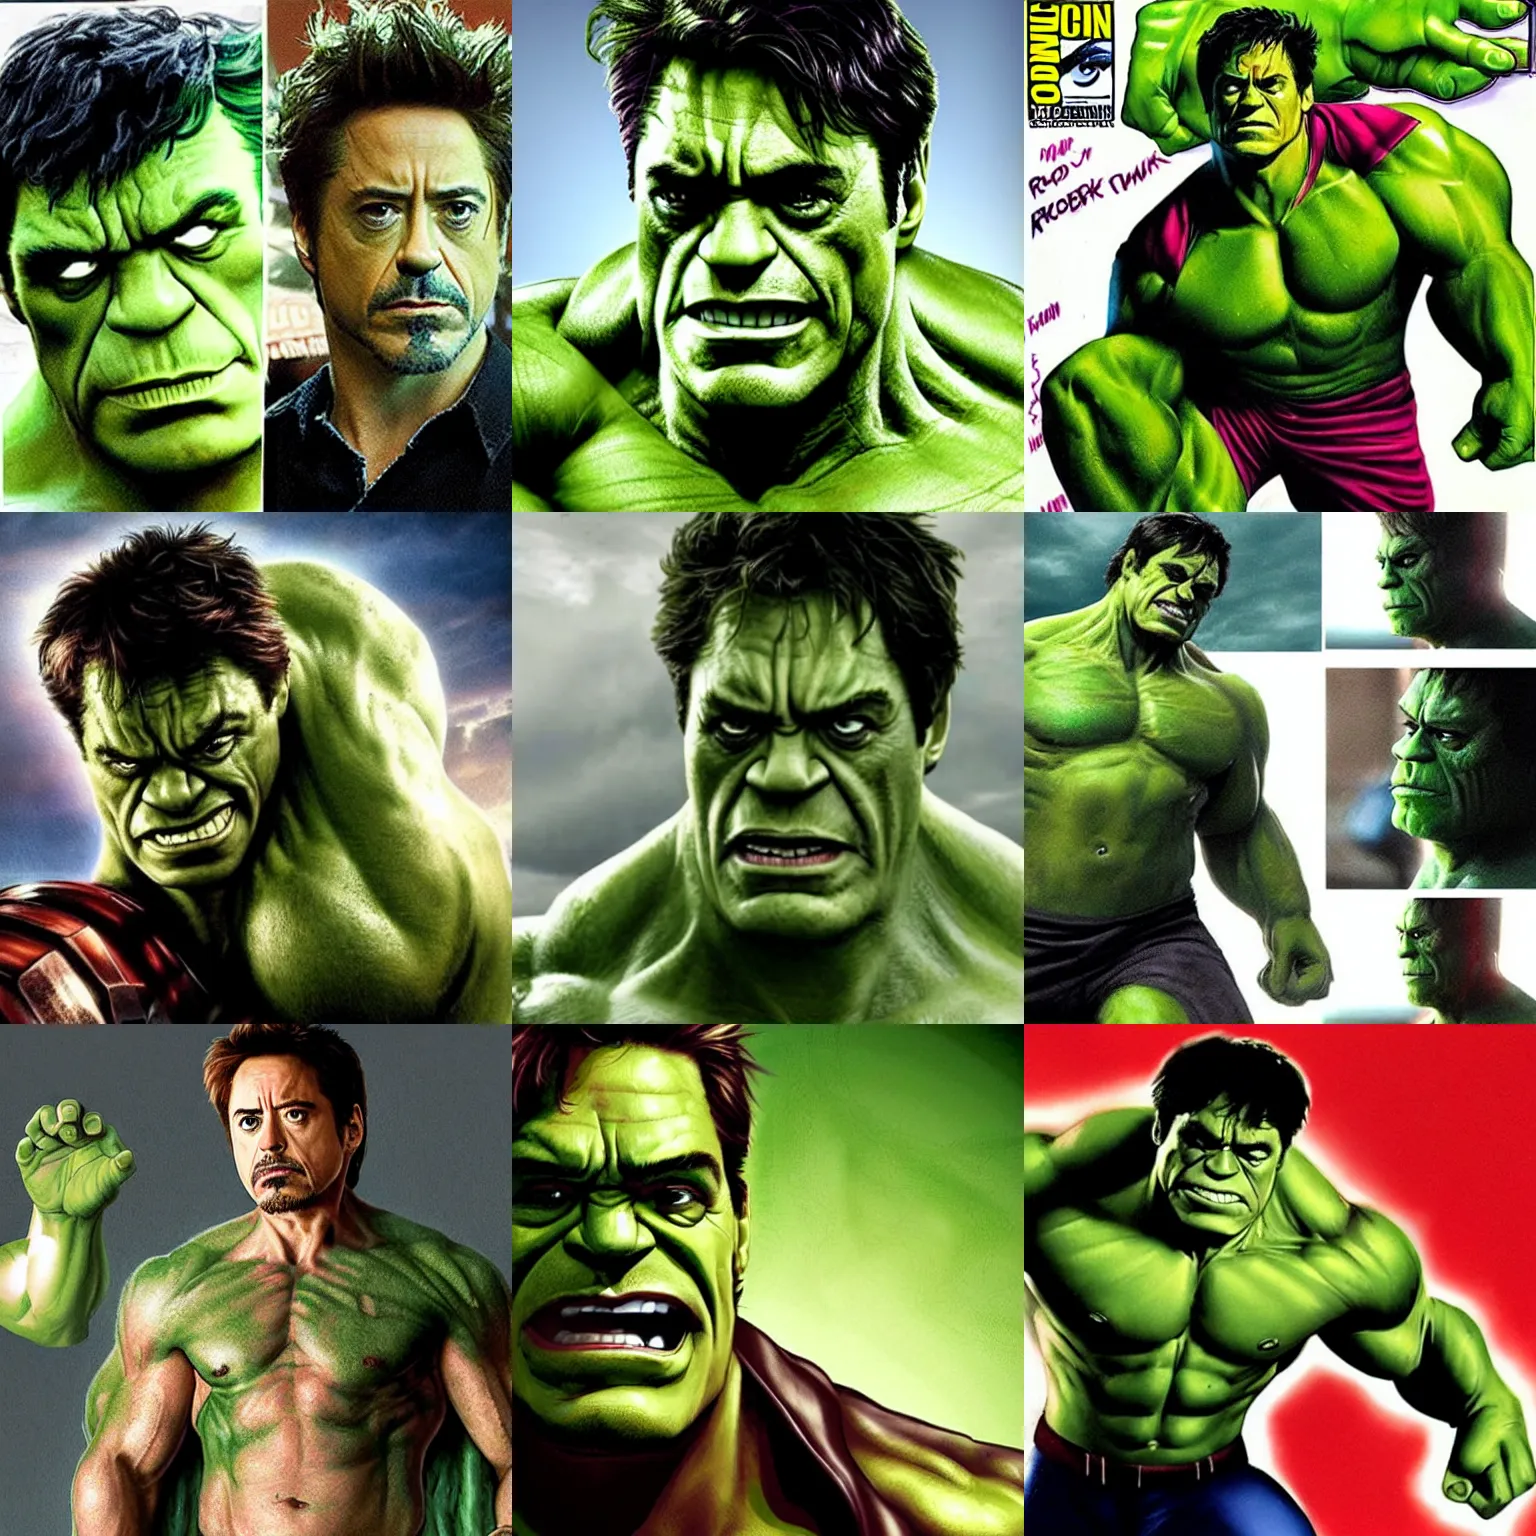 Prompt: Robert Downey jr as the Hulk